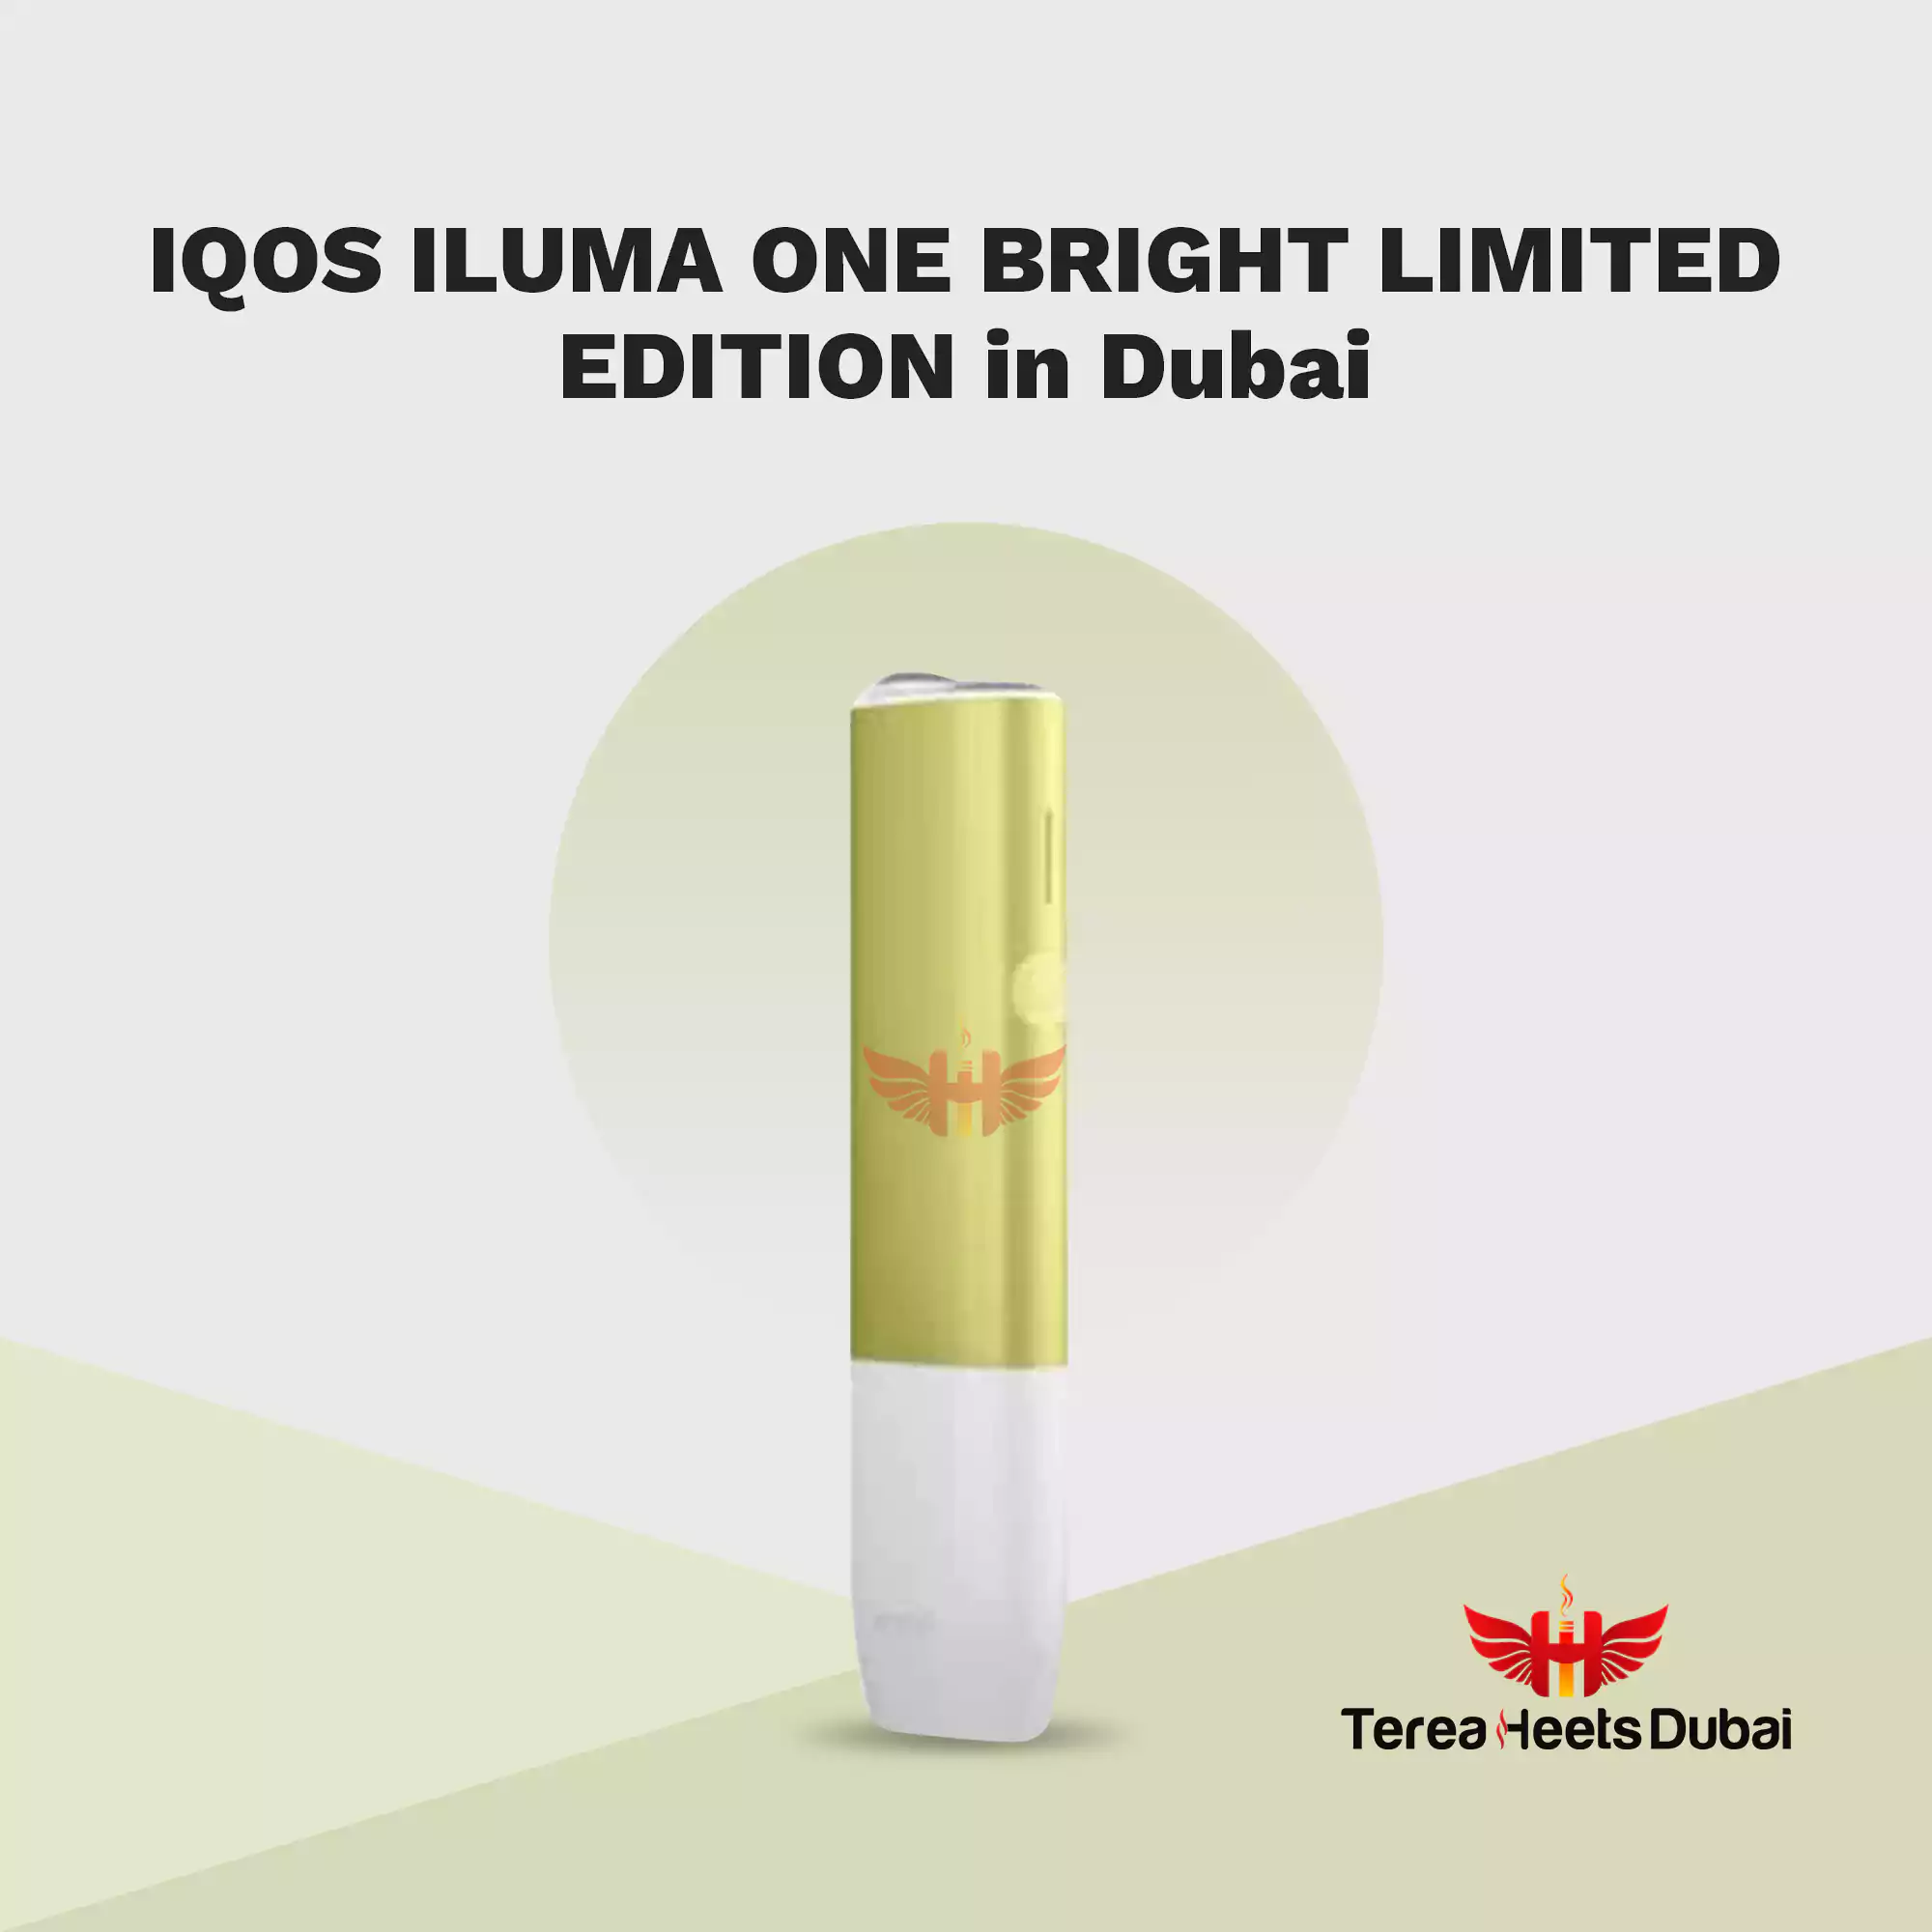 Iqos Iluma One Bright Limited Edition Uae